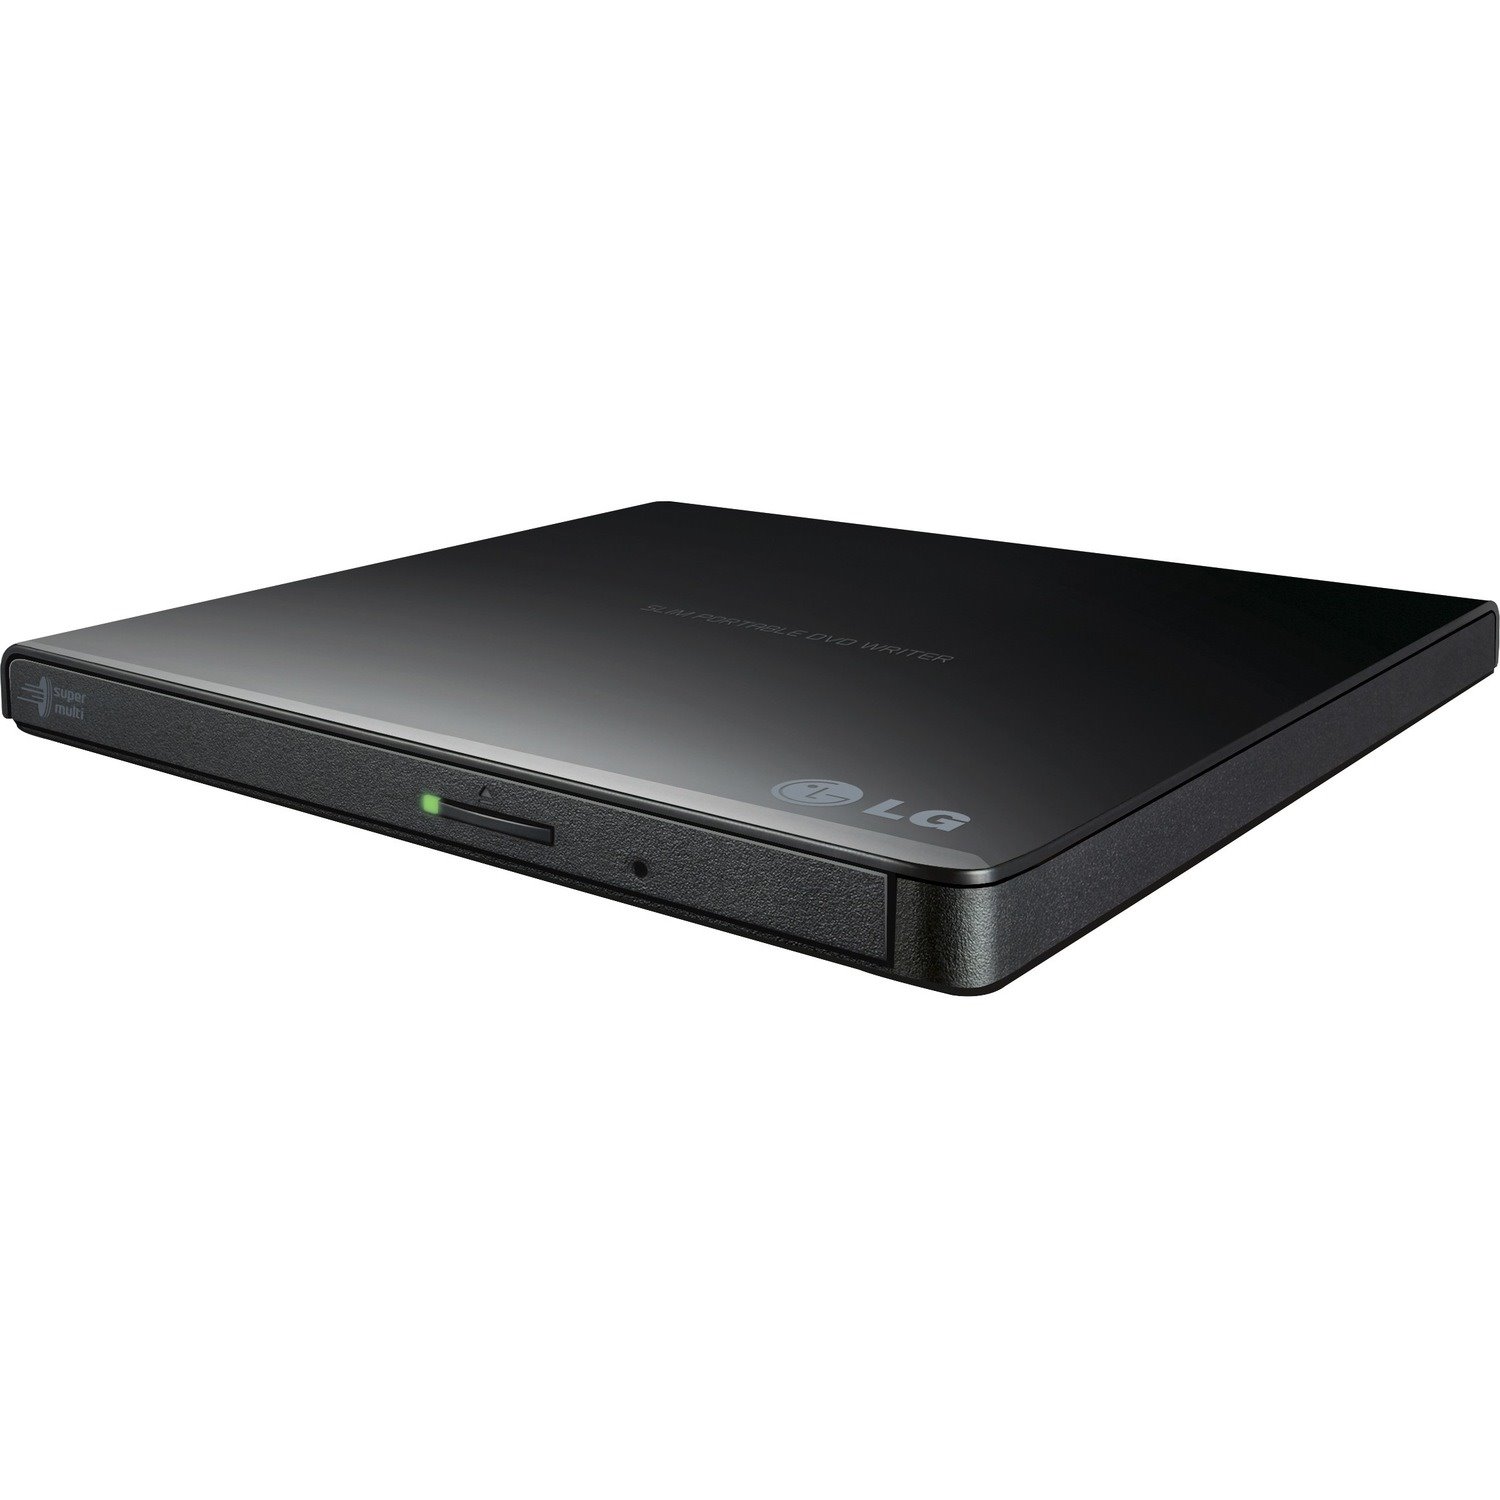 LG GP65NB60 DVD-Writer - External - 1 x Retail Pack - Black